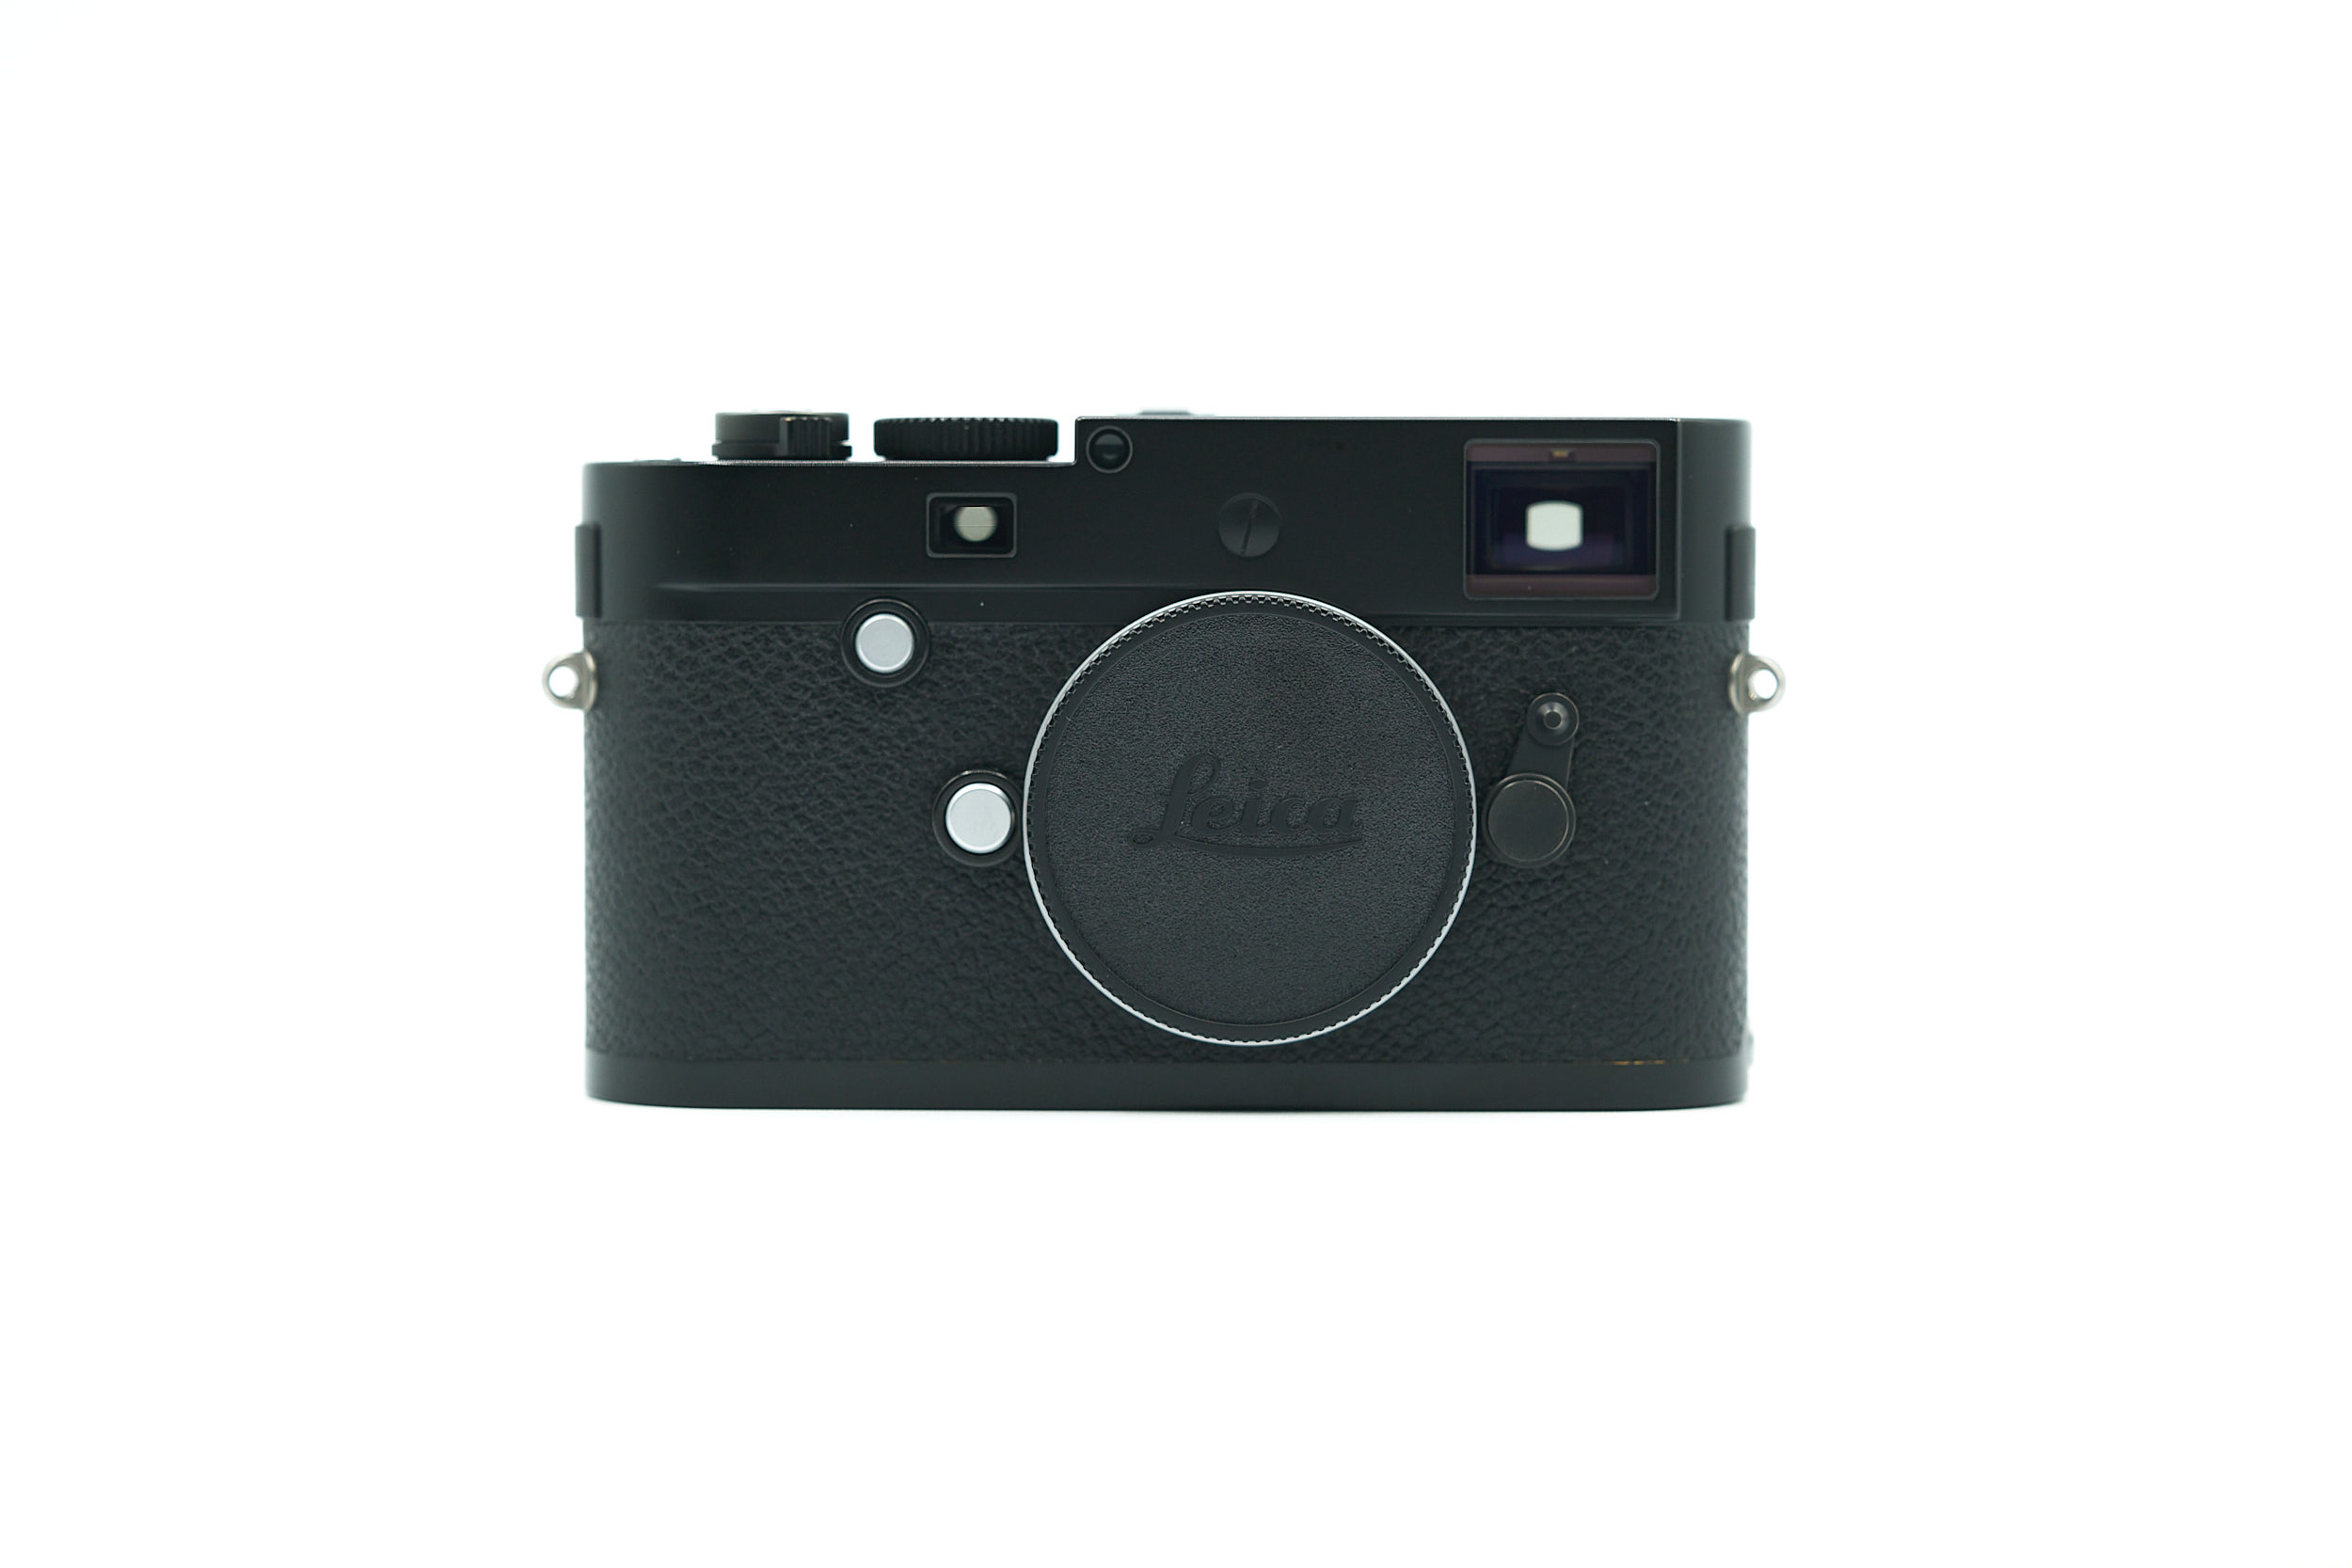 Leica M-P (Typ 240) Black